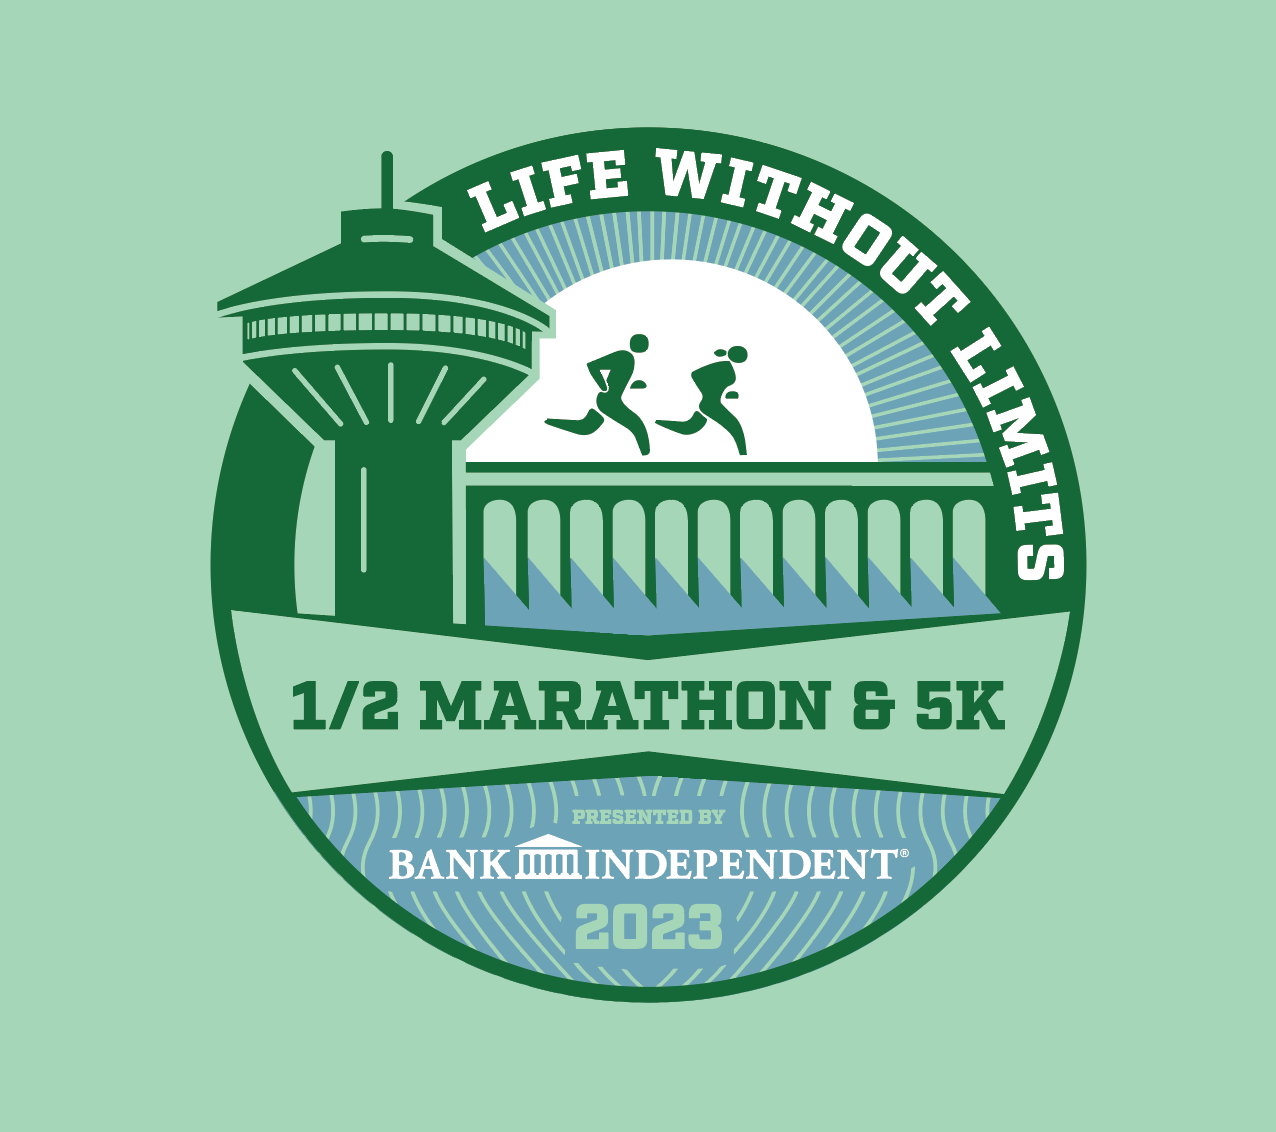 Life Without Limits Half Marathon & 5K logo on RaceRaves